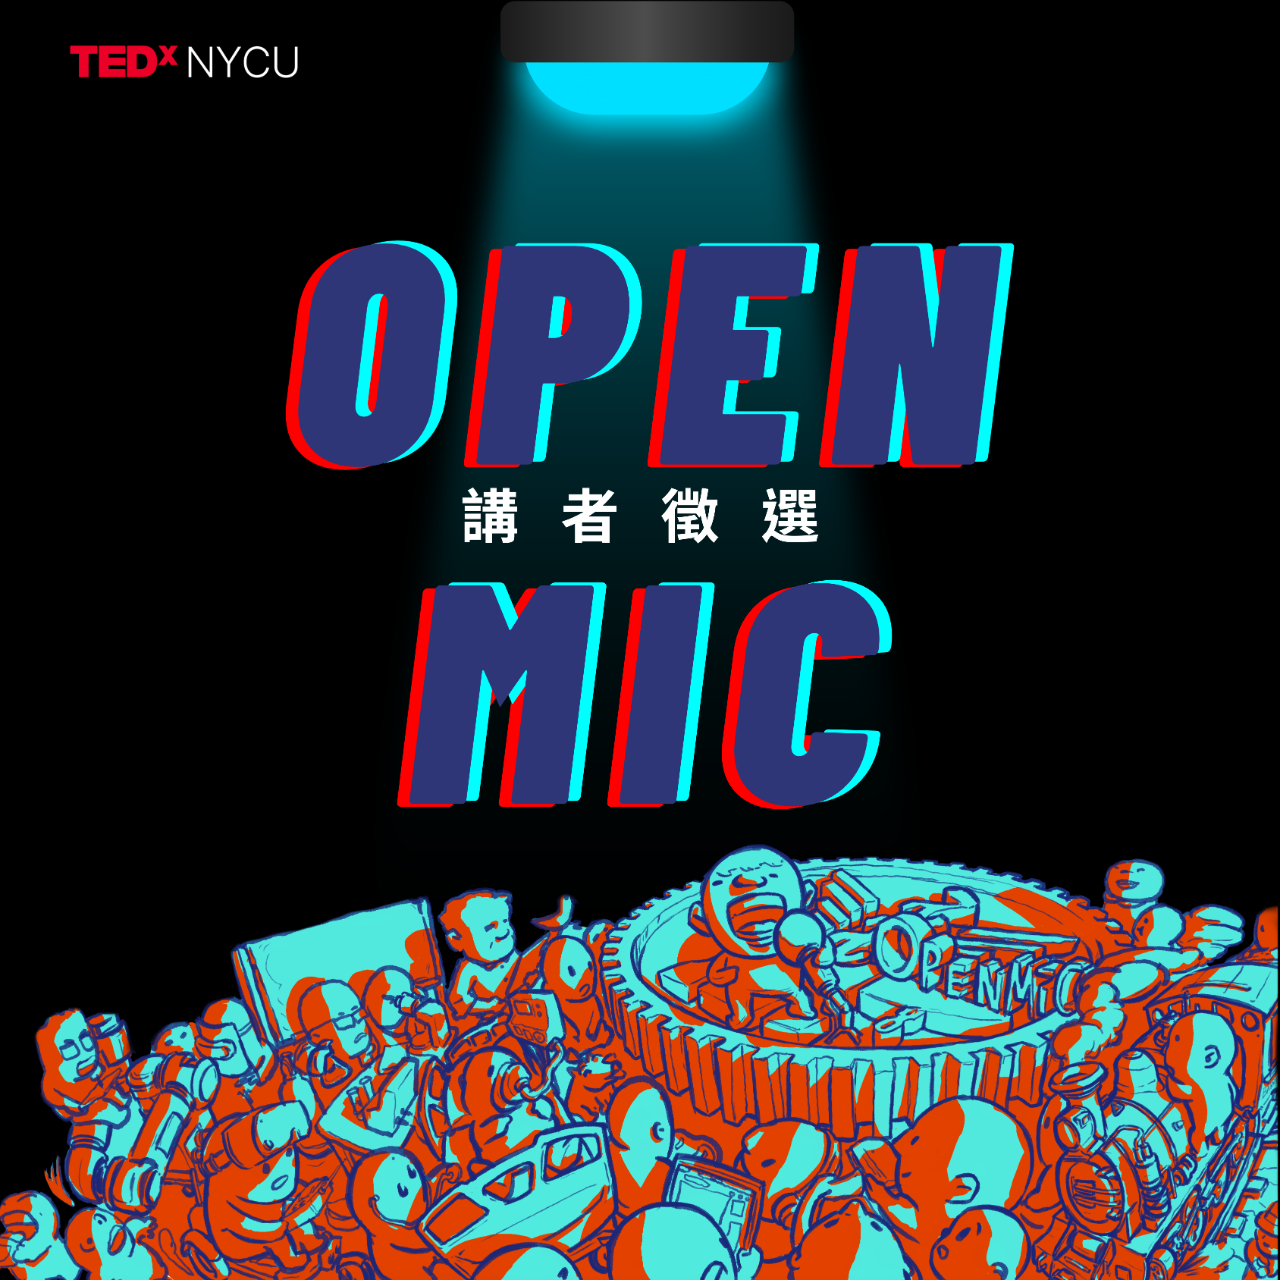 TEDxNYCU 報名 Open Mic 就有機會成為 TEDxNYCU 講者！